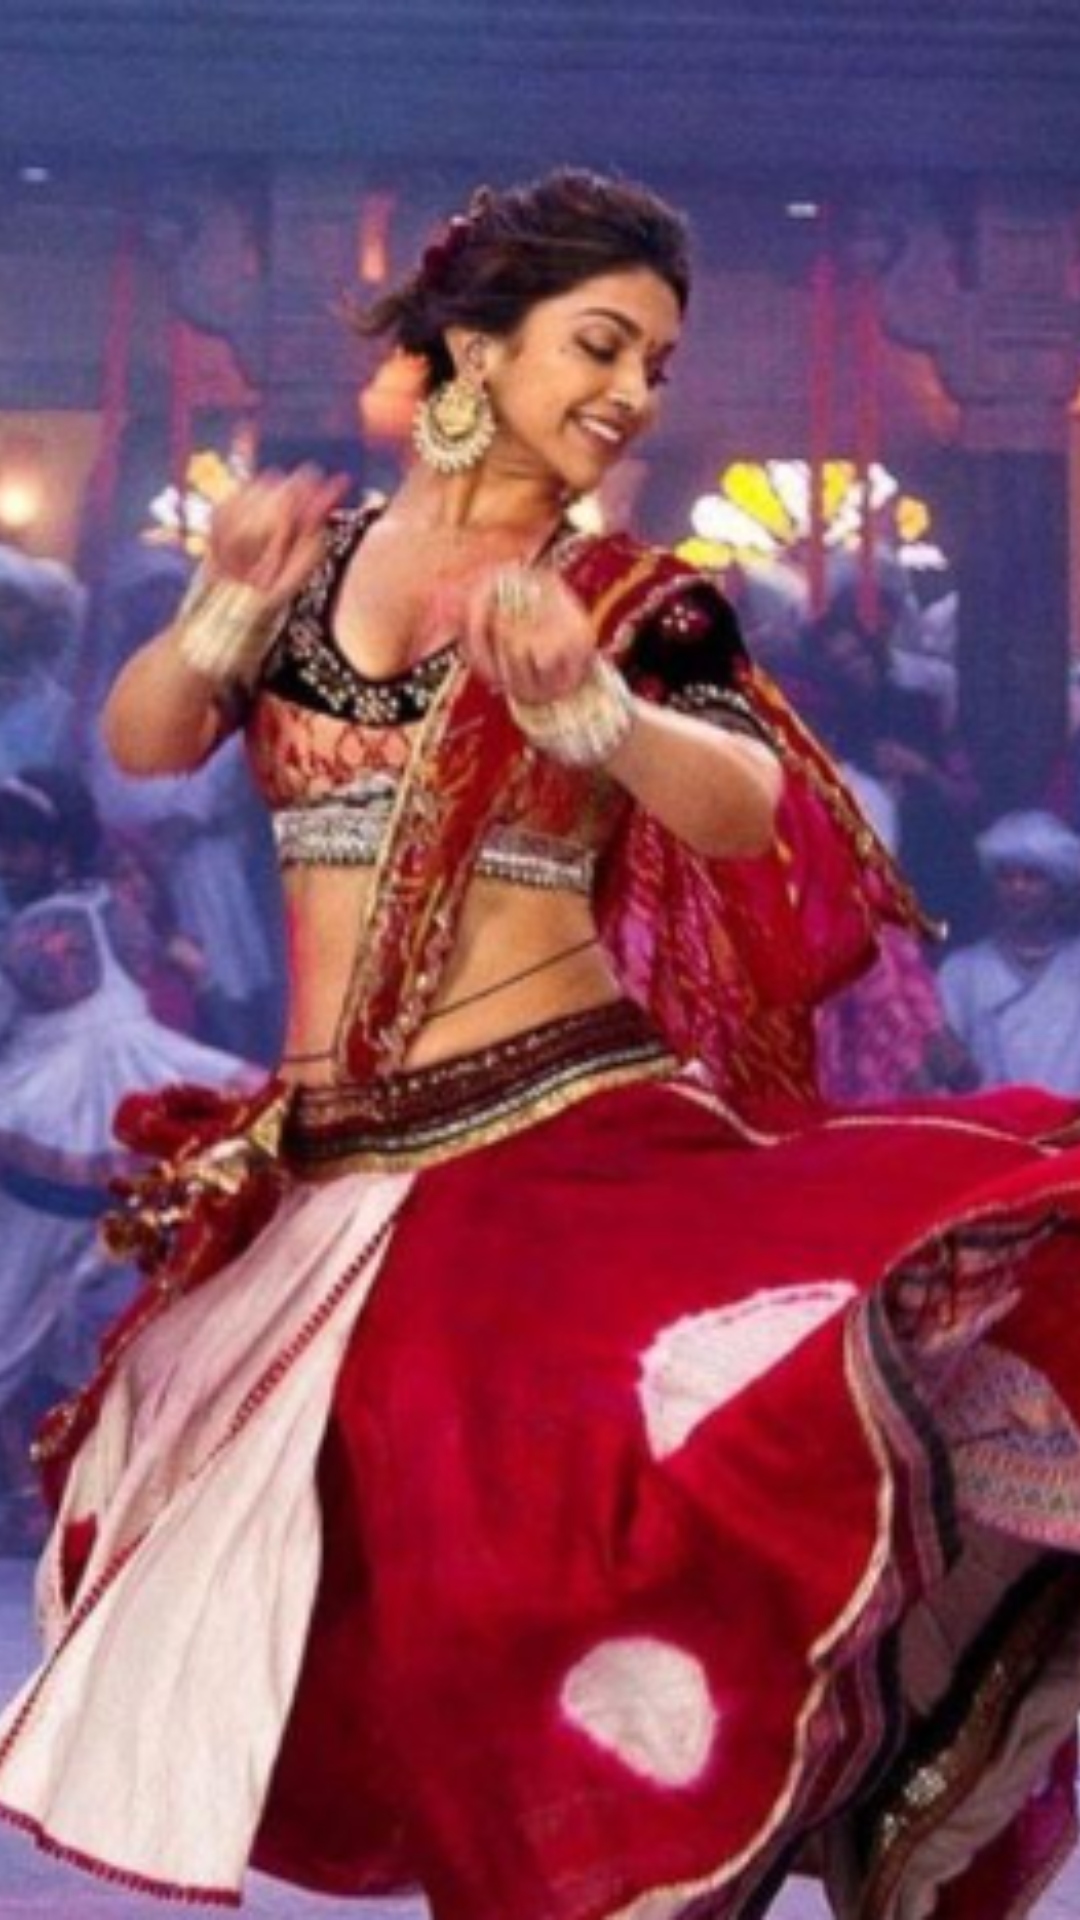 30 New & Rocking Bollywood Songs For Your Sangeet Night! | Wedding Ideas |  Wedding Blog